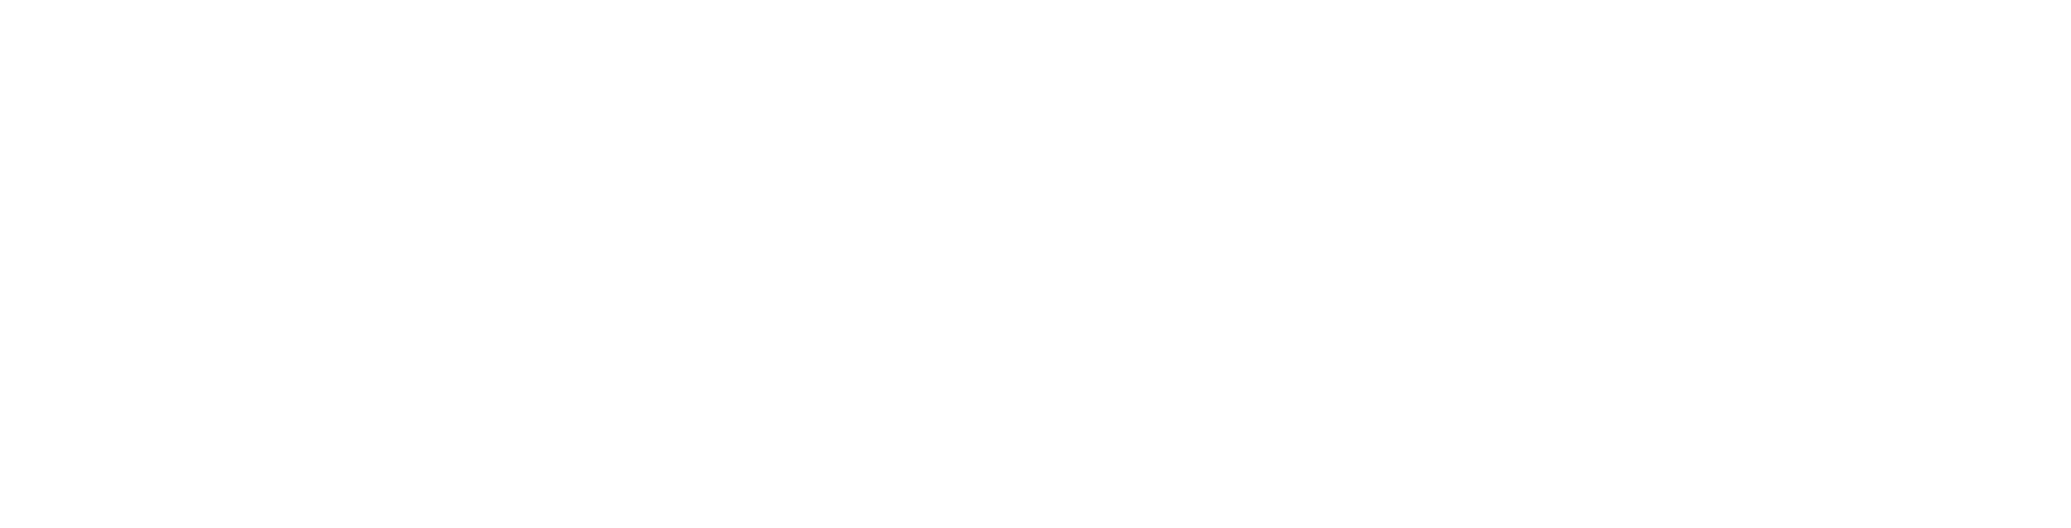 SpotLight, minimal white rectangle logo